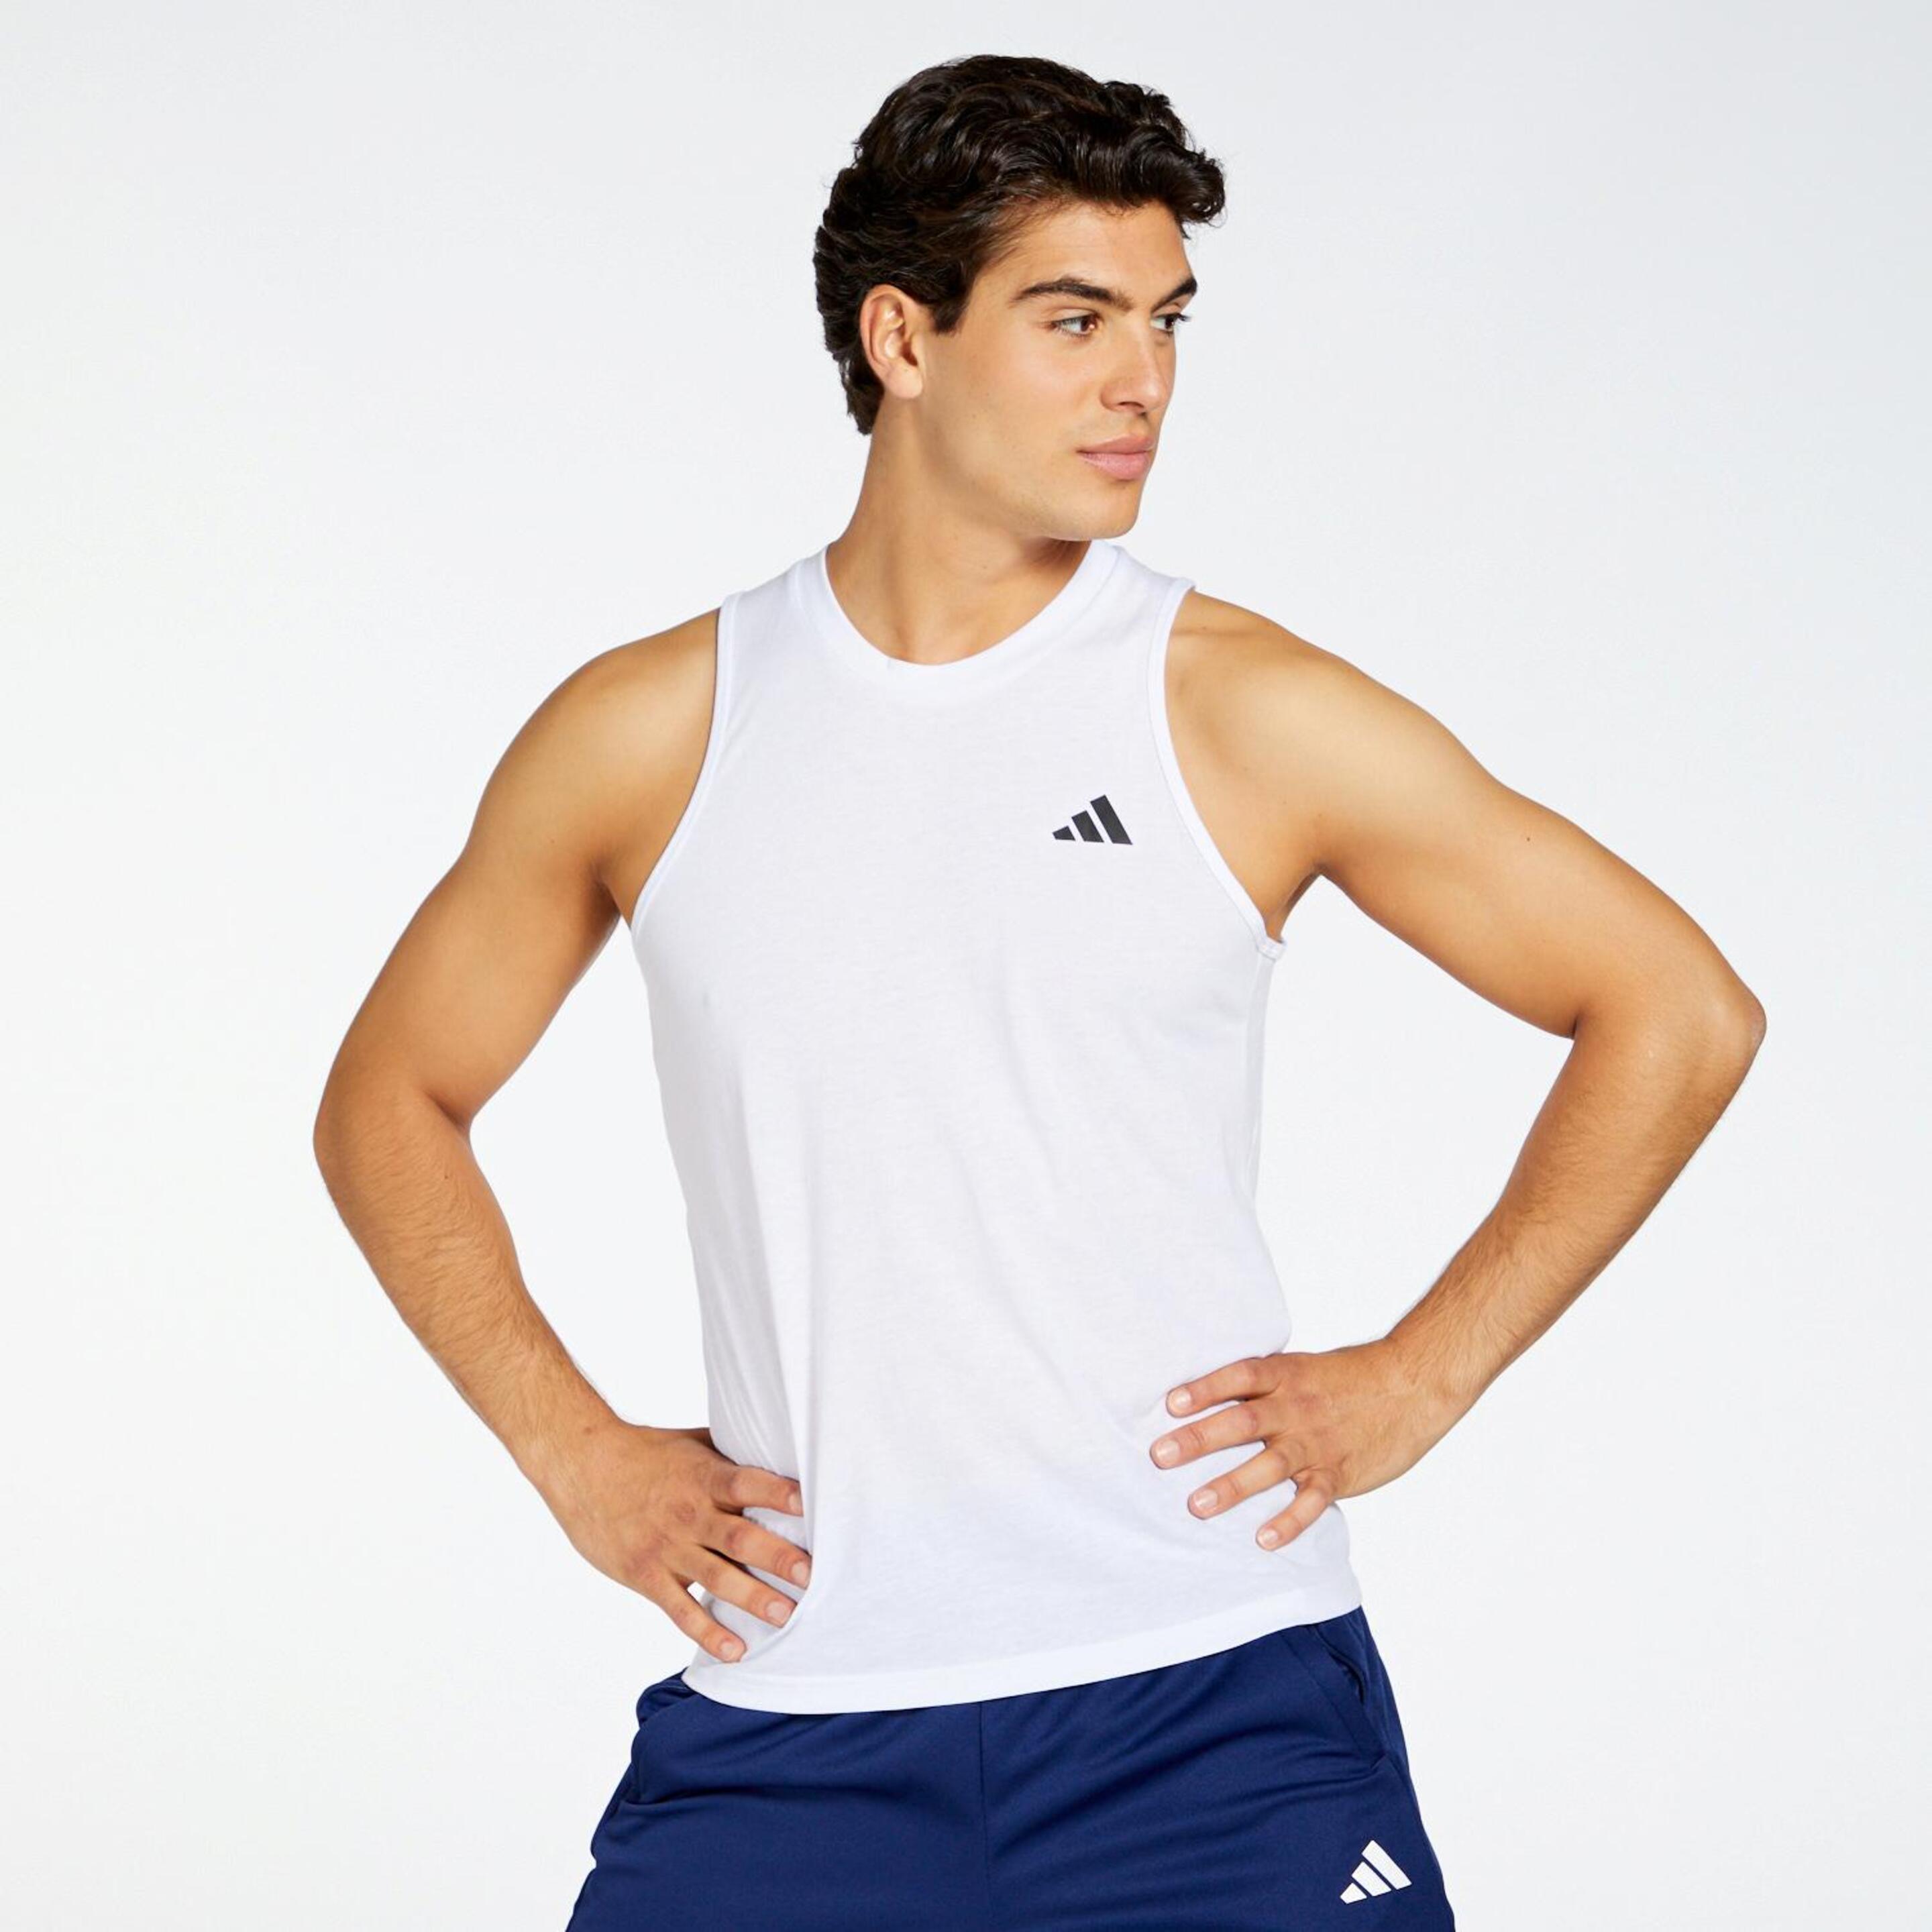 Camiseta Running adidas - blanco - Camiseta Tirantes Hombre